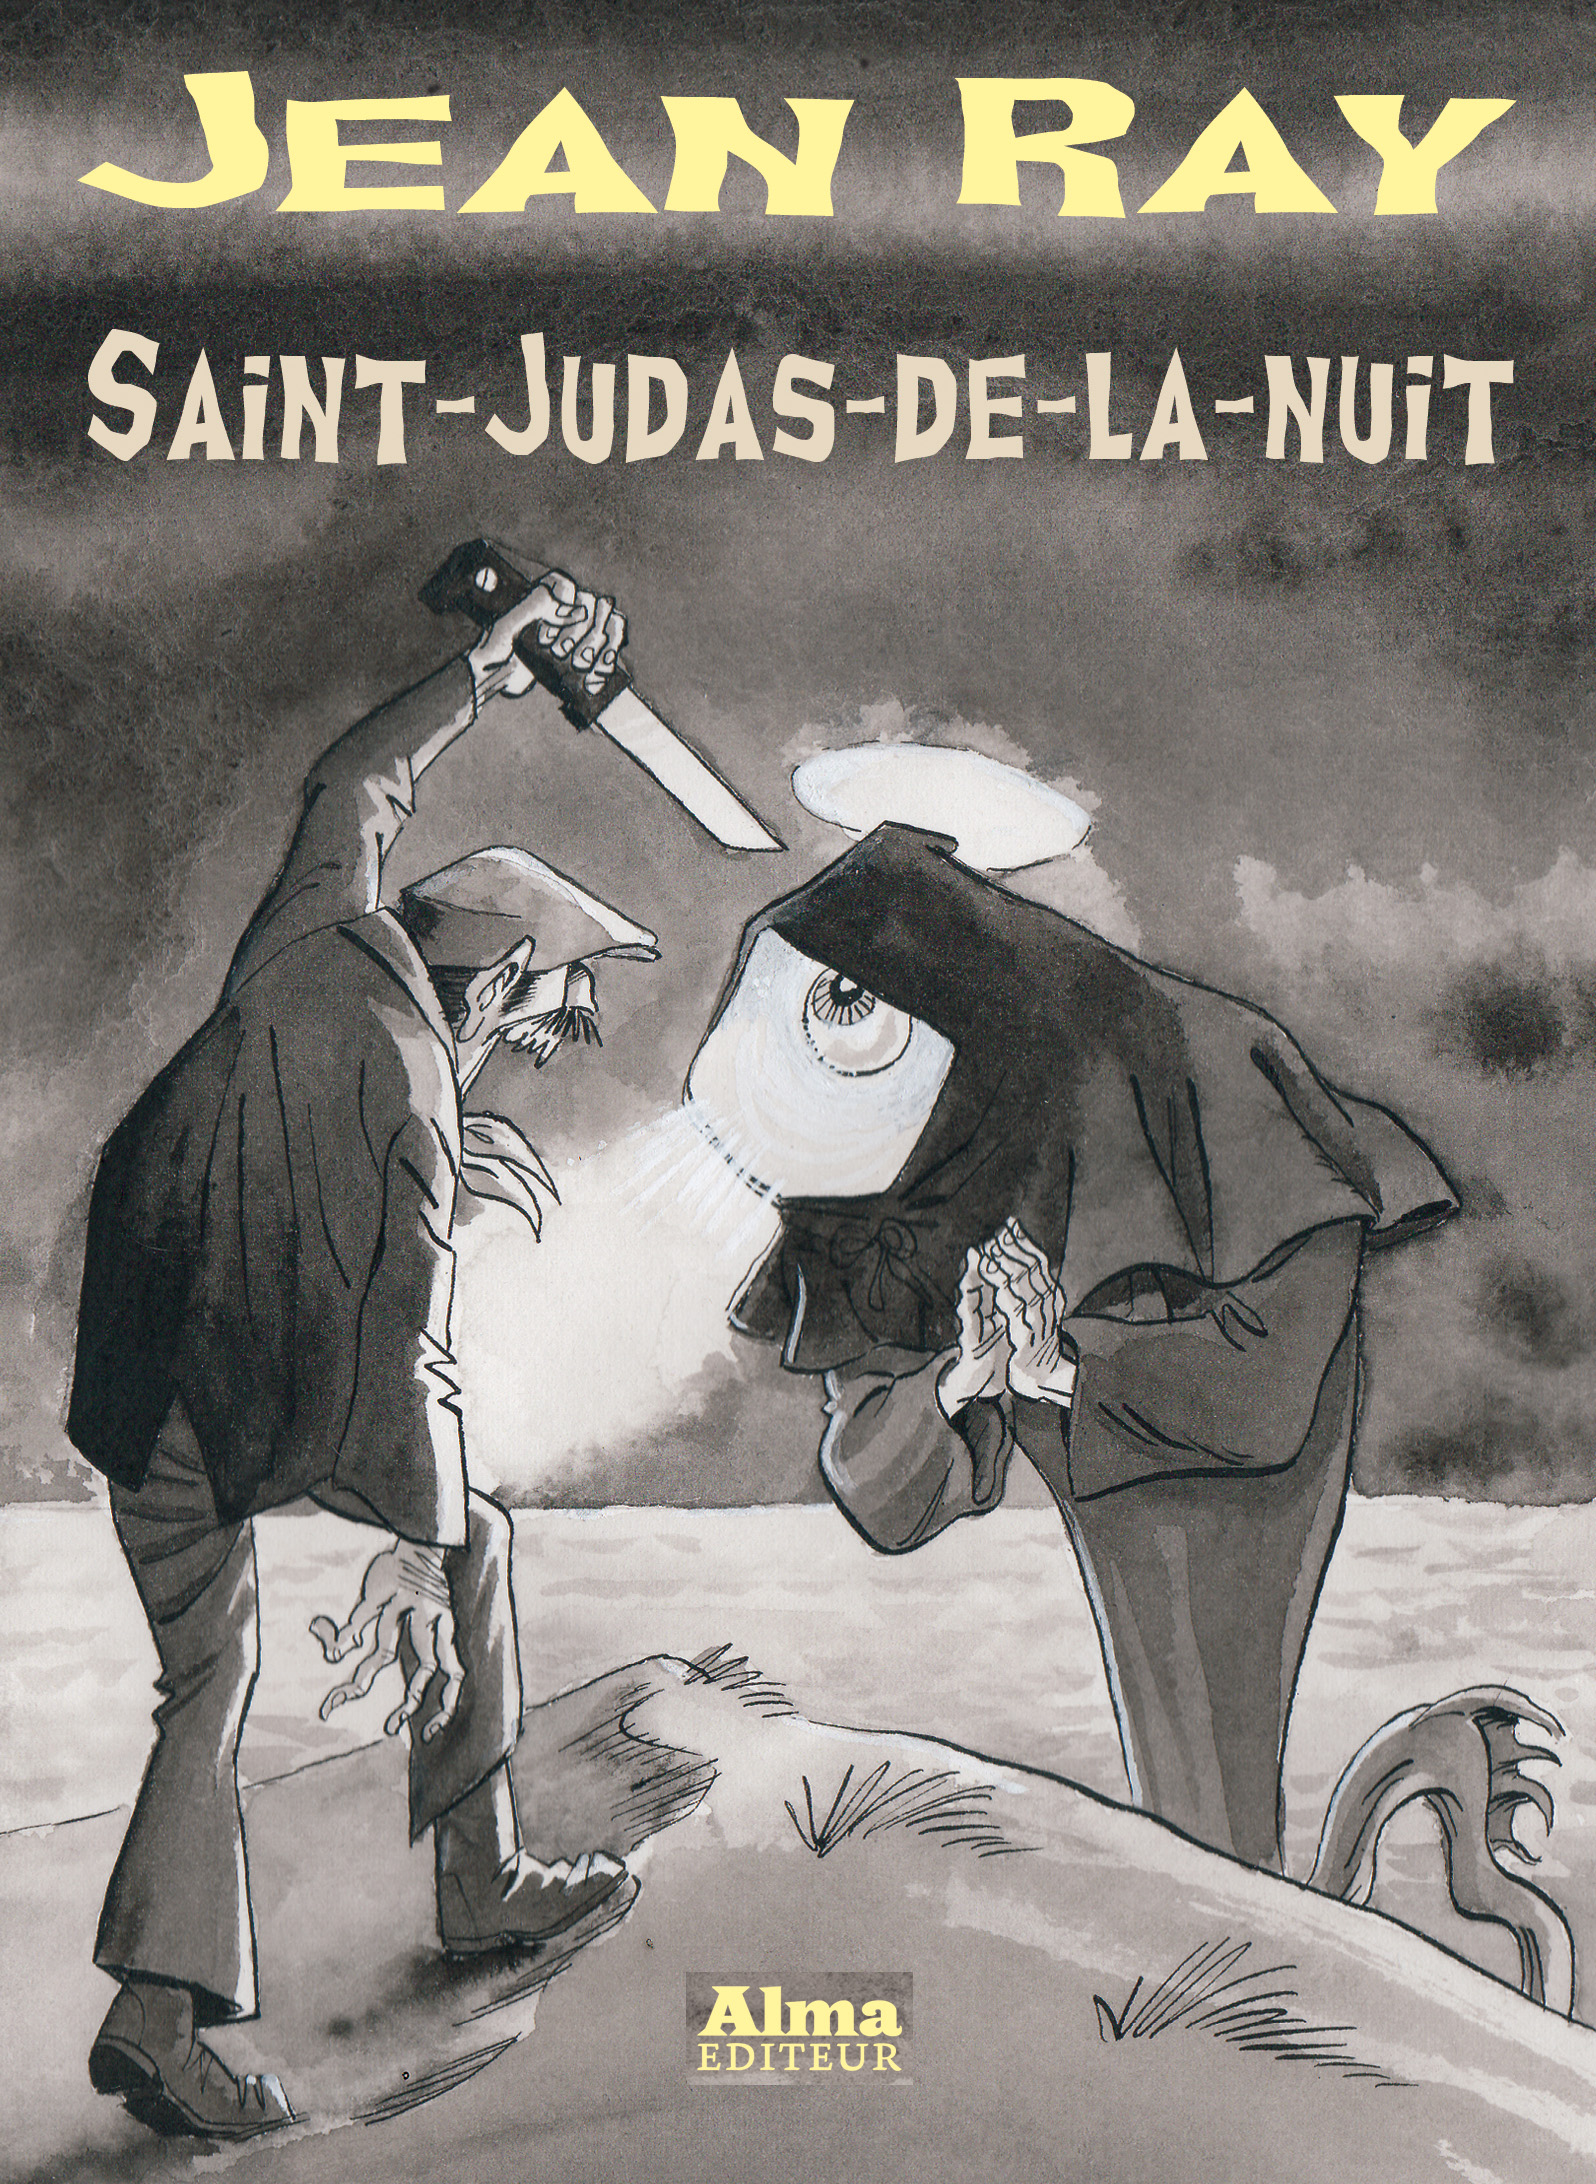 Philippe Foerster Mu Blondeau Saint-Judas-de-la-nuit Jean Ray Alma